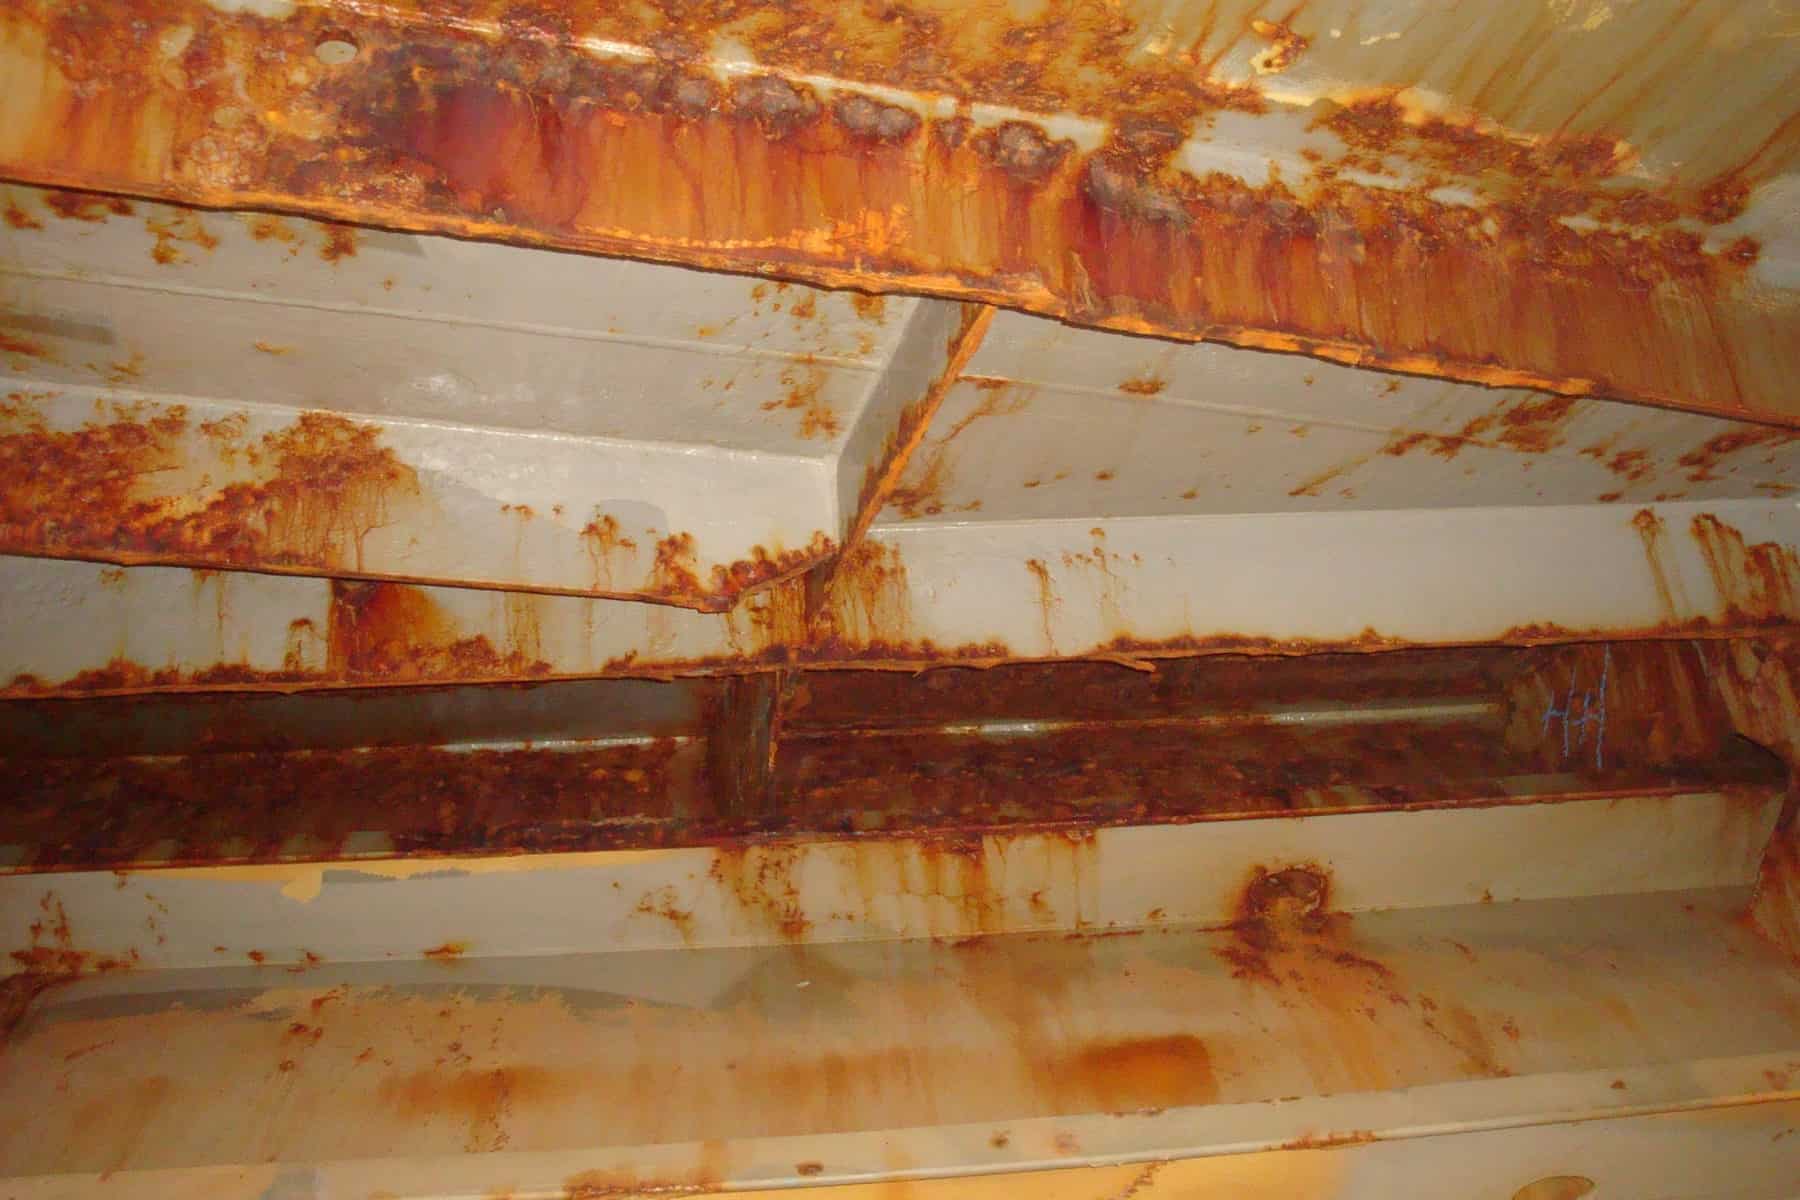 tank internals showing severe rust